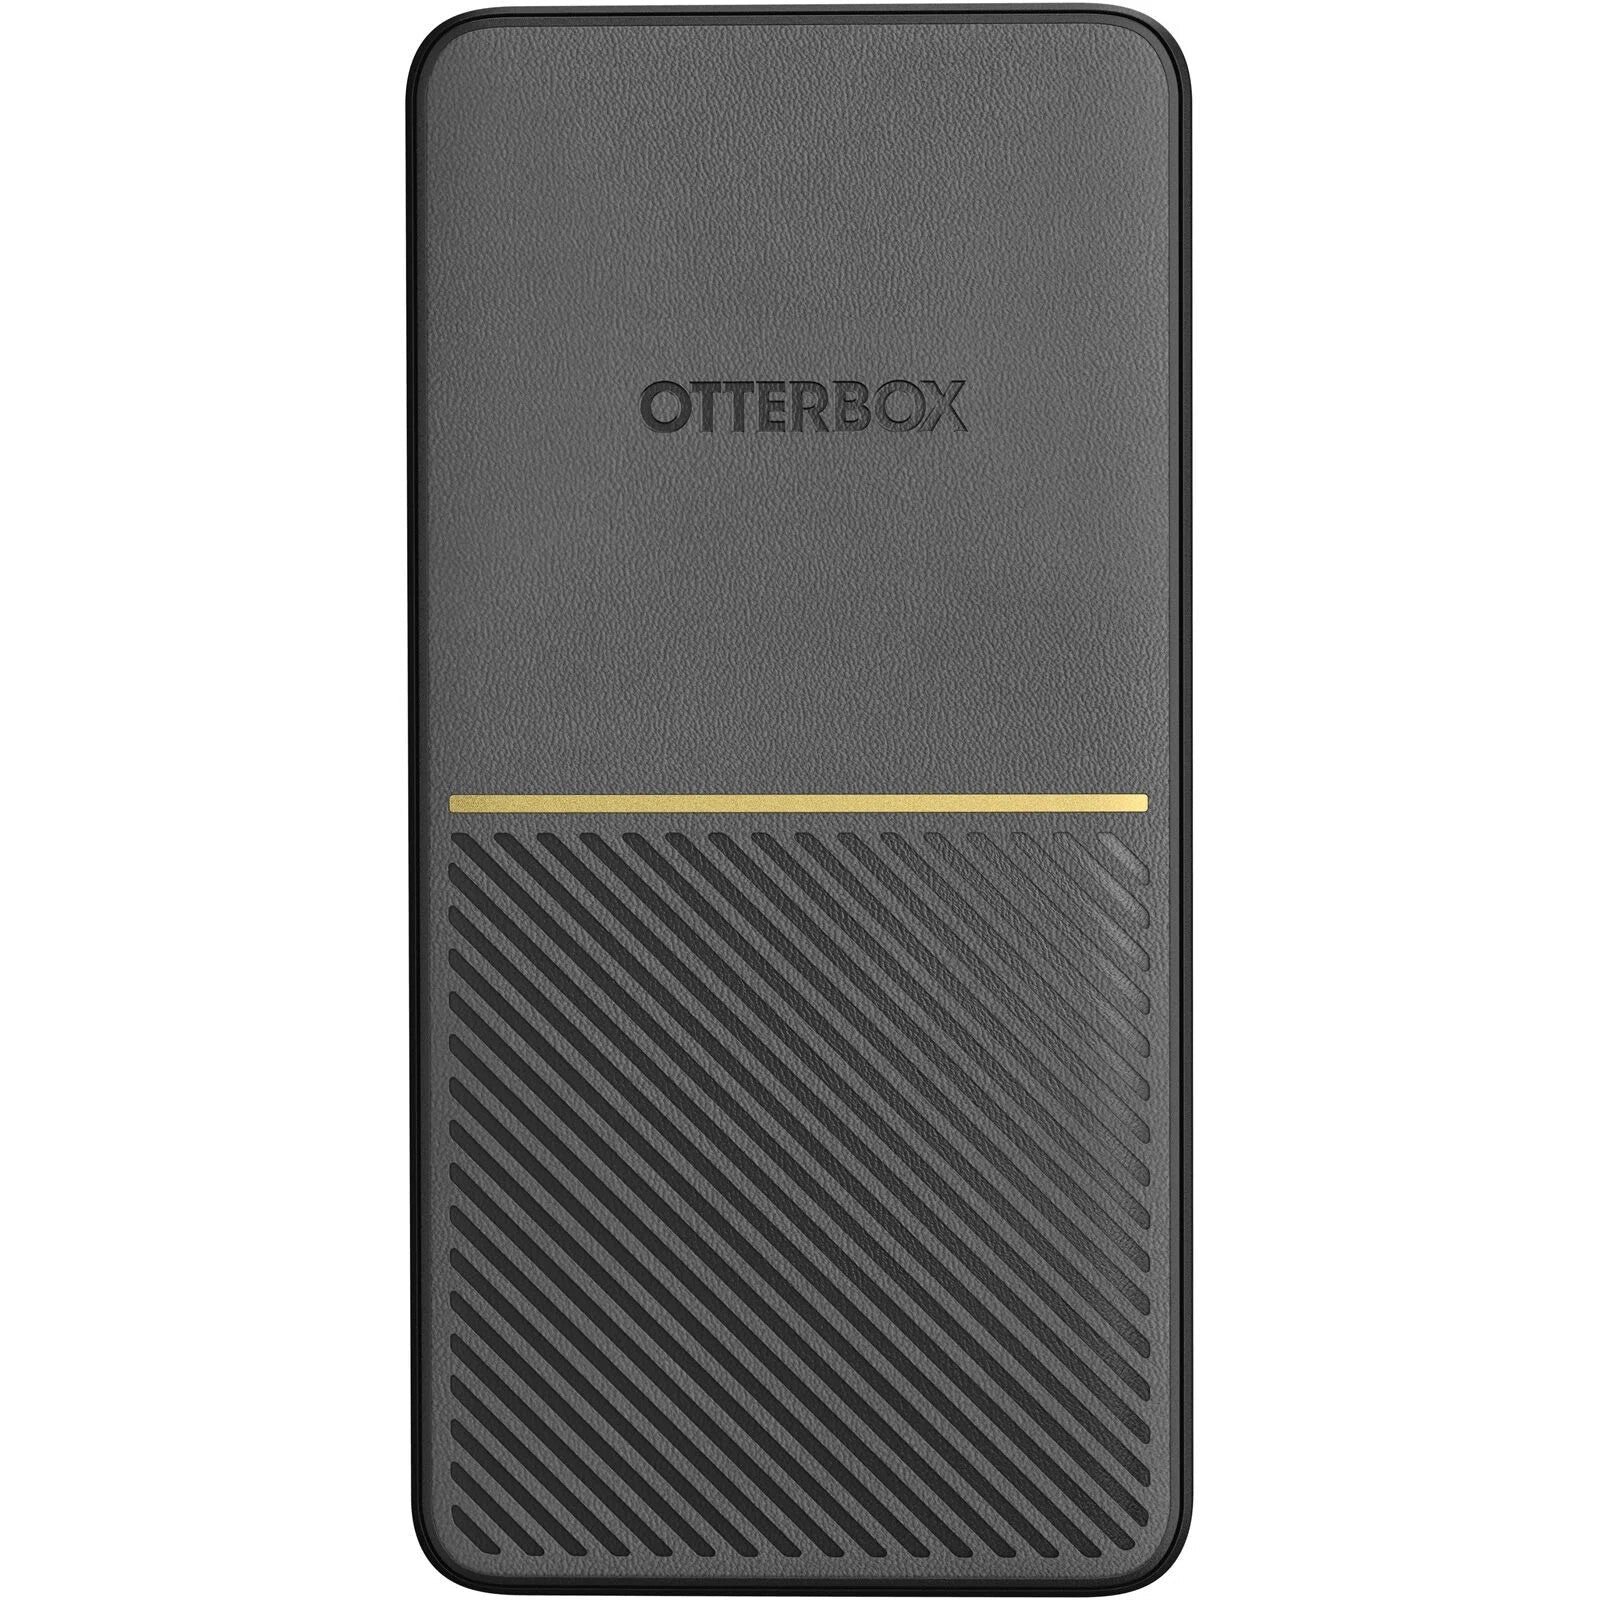 OtterBox 15,000mAh USB-A / USB-C PD 18W Power Bank - Black - maplin.co.uk